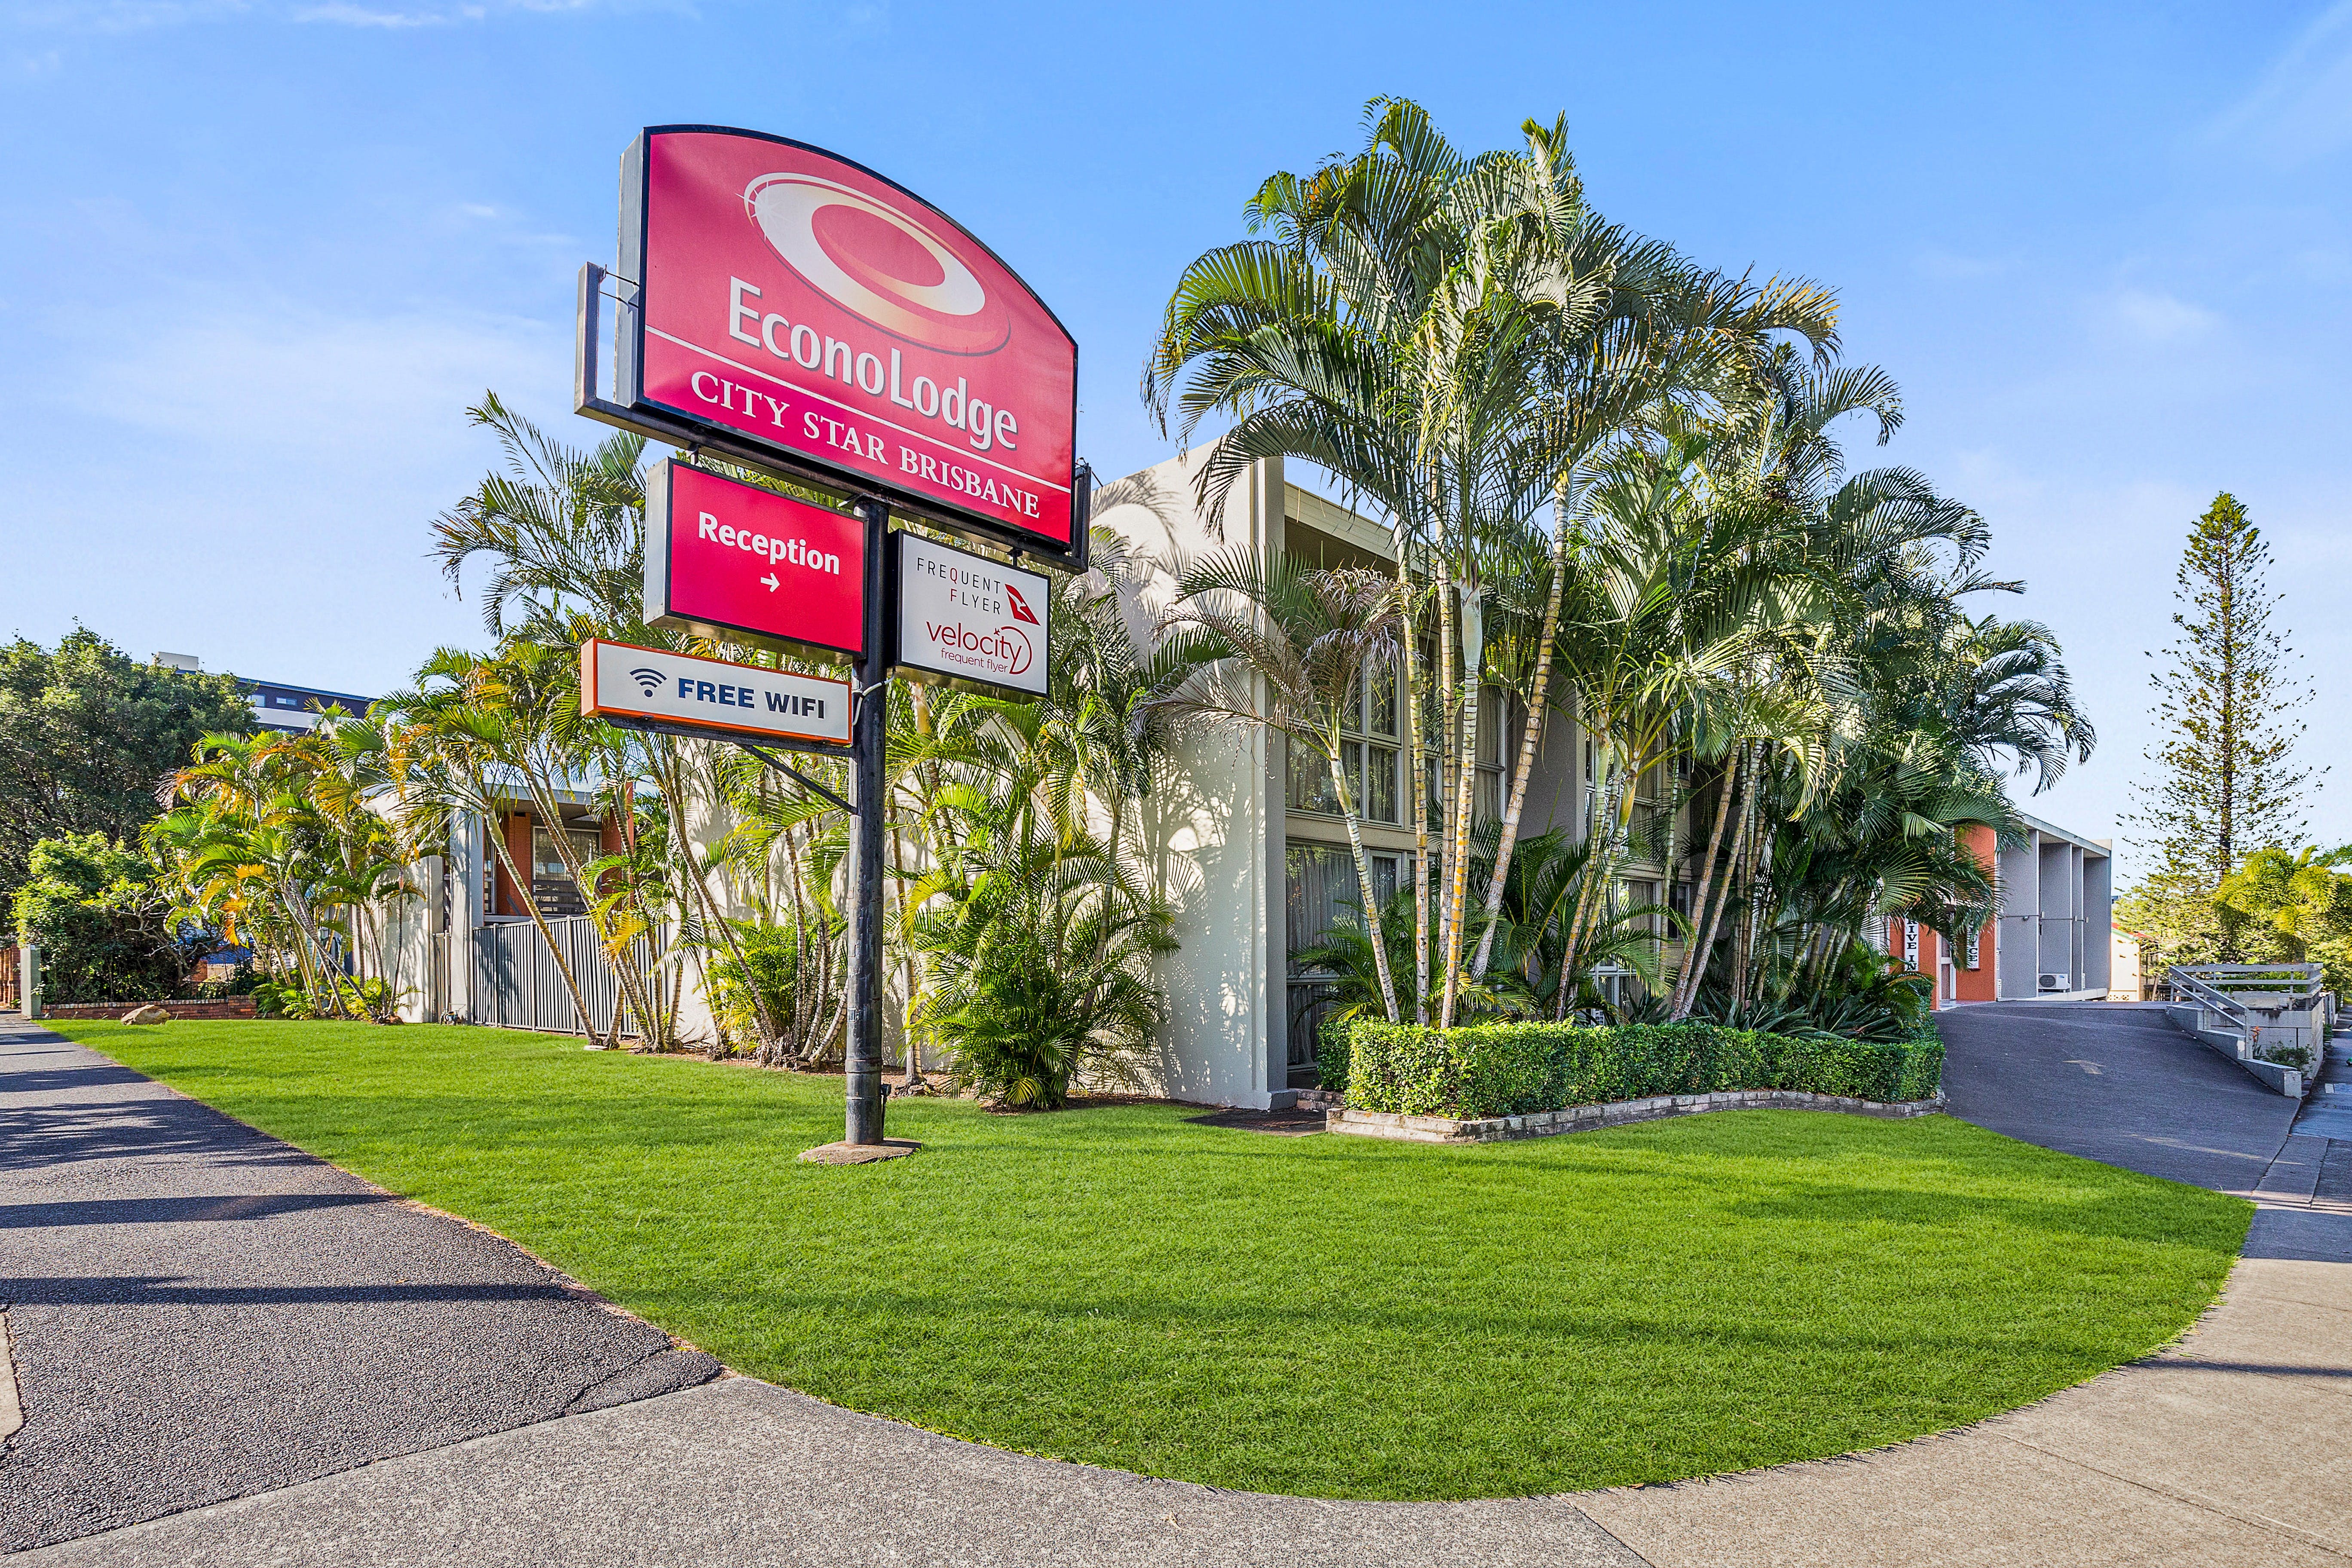 Econo Lodge City Star Brisbane - Accommodation in Surfers Paradise